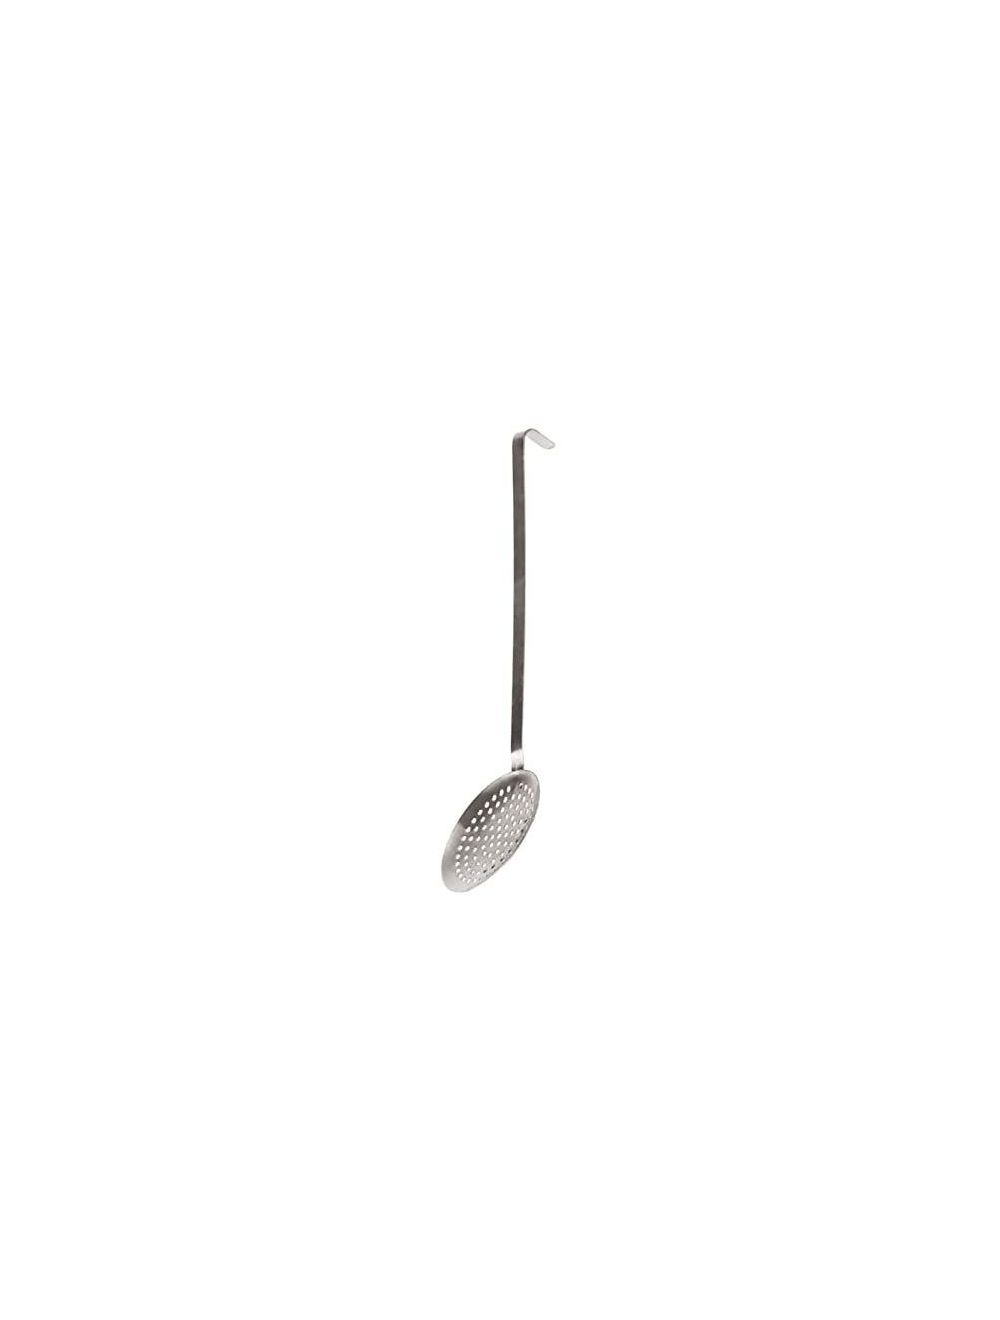 Raj Professional Skimmer Spoon, Silver, 60.5 cm, RPS007